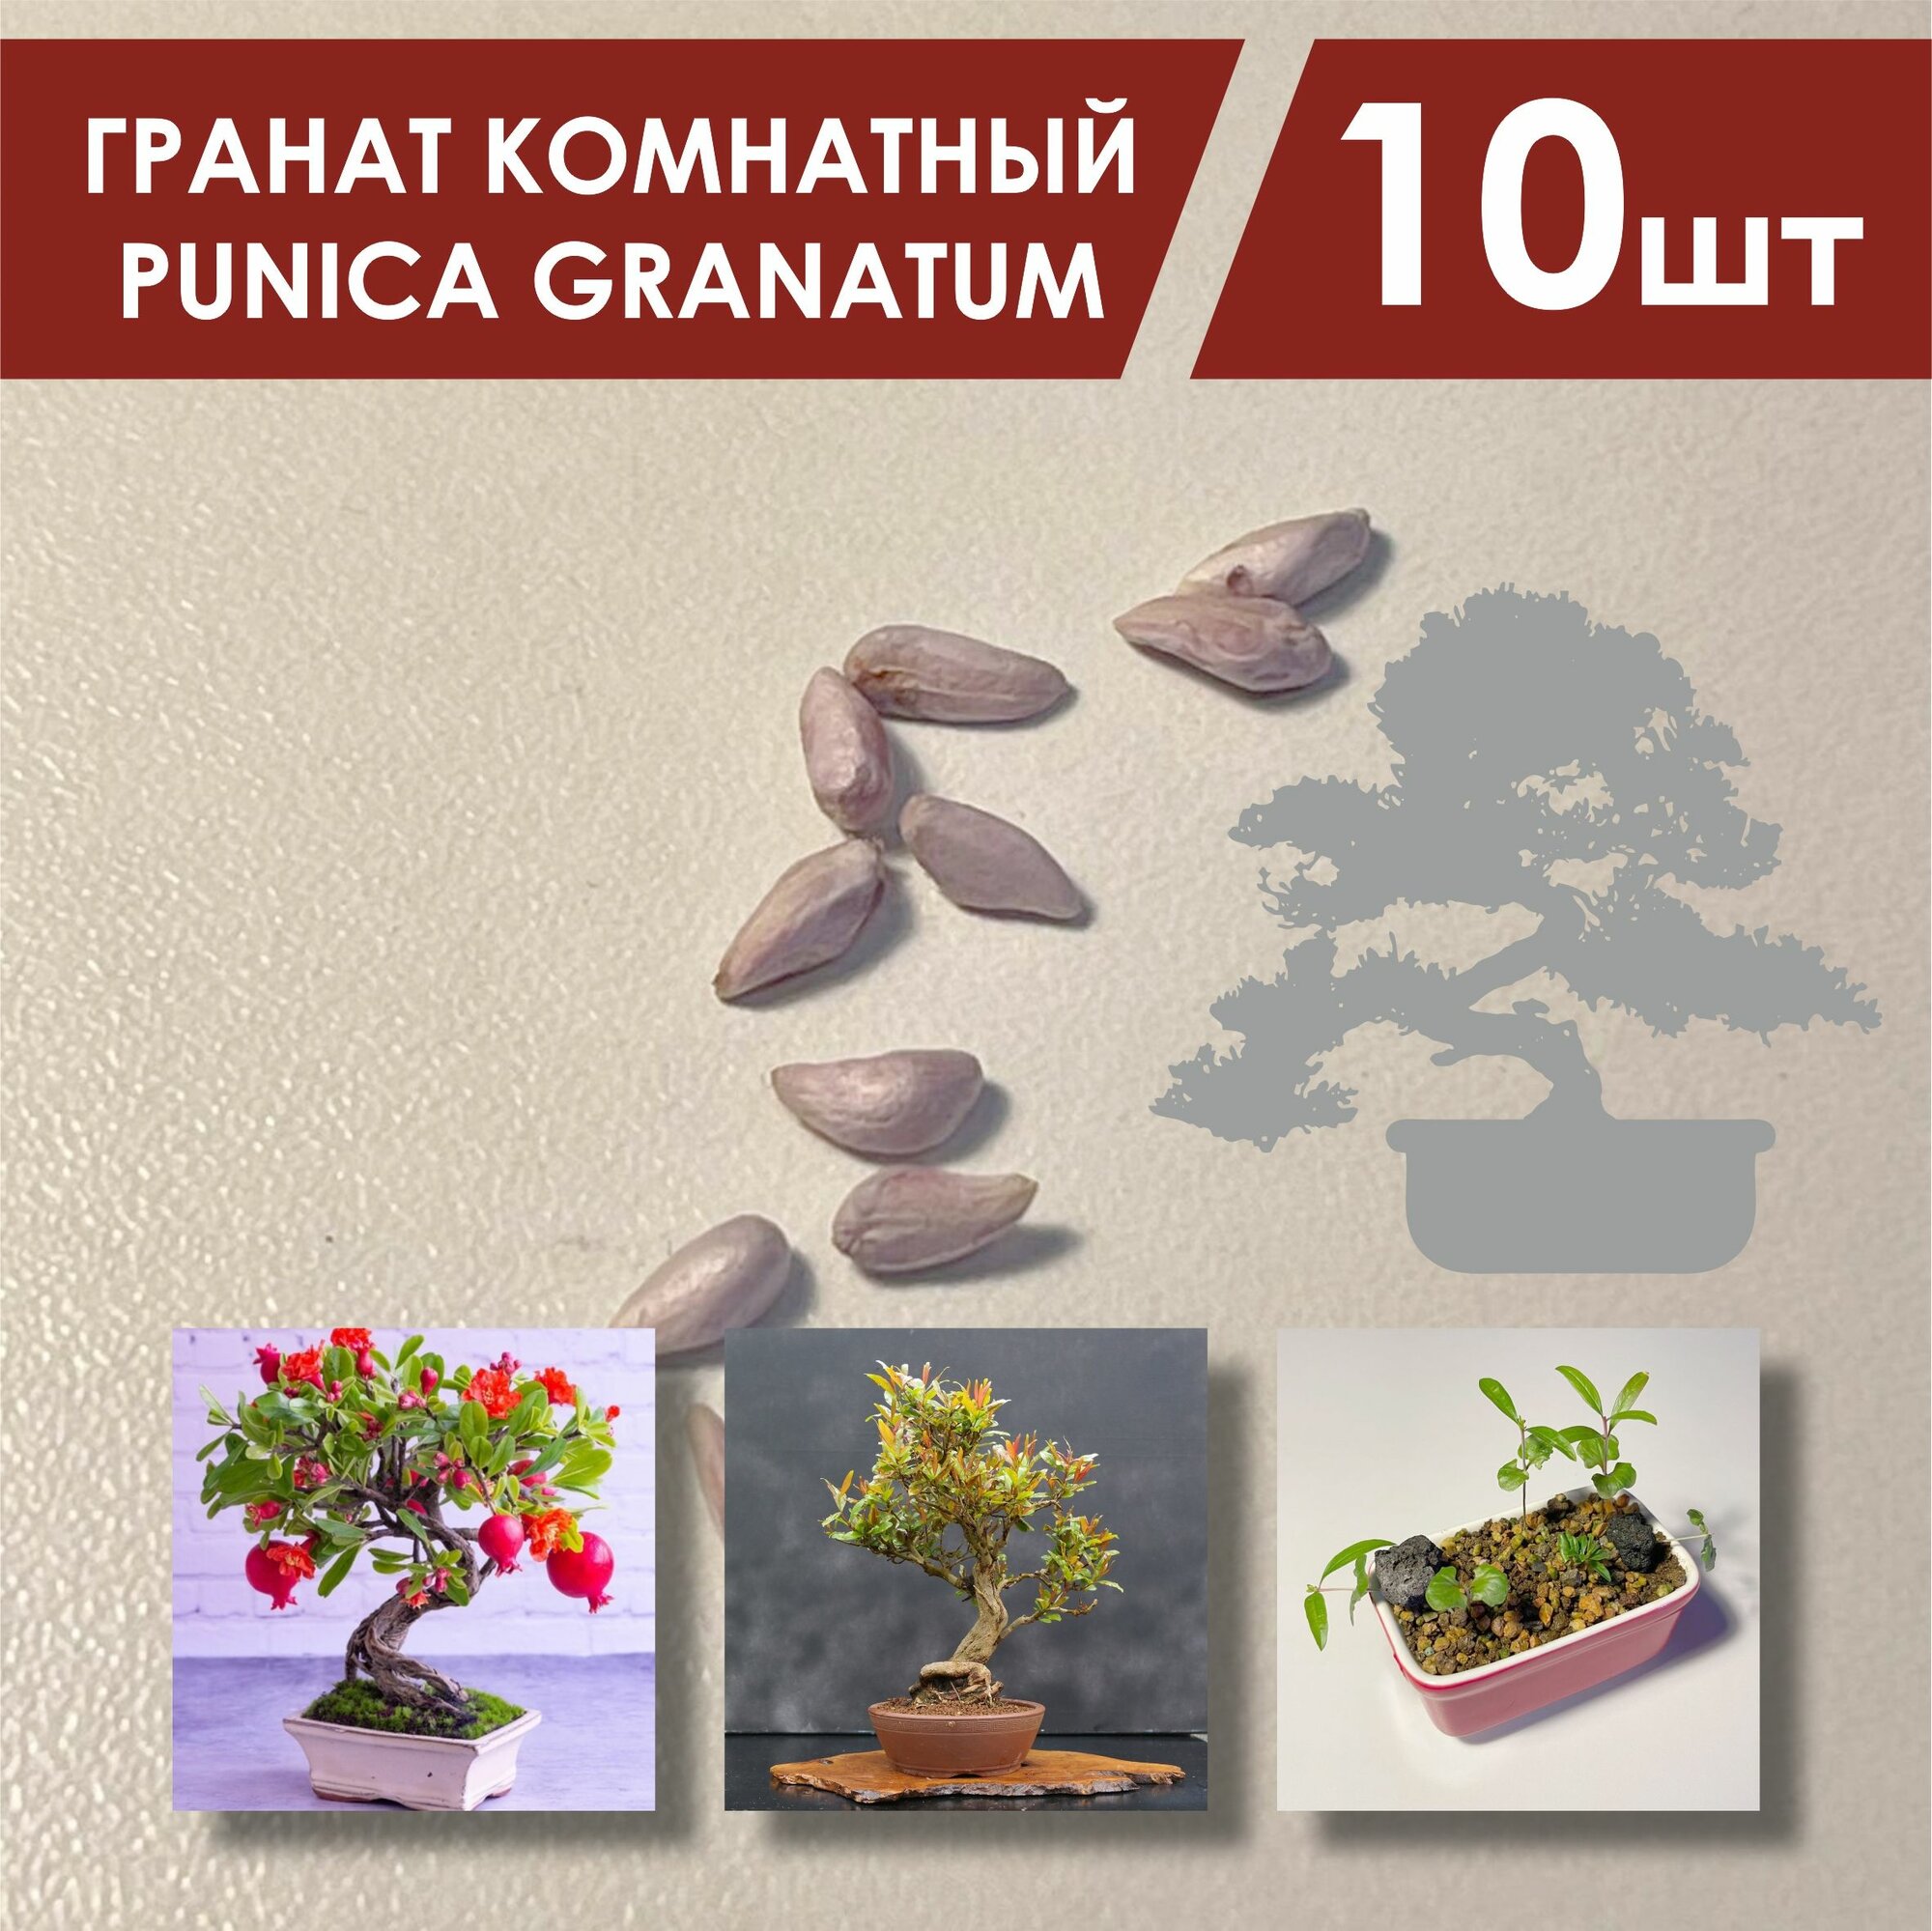 Семена граната комнатного 10 шт. / Гранат комнатный Punica granatum